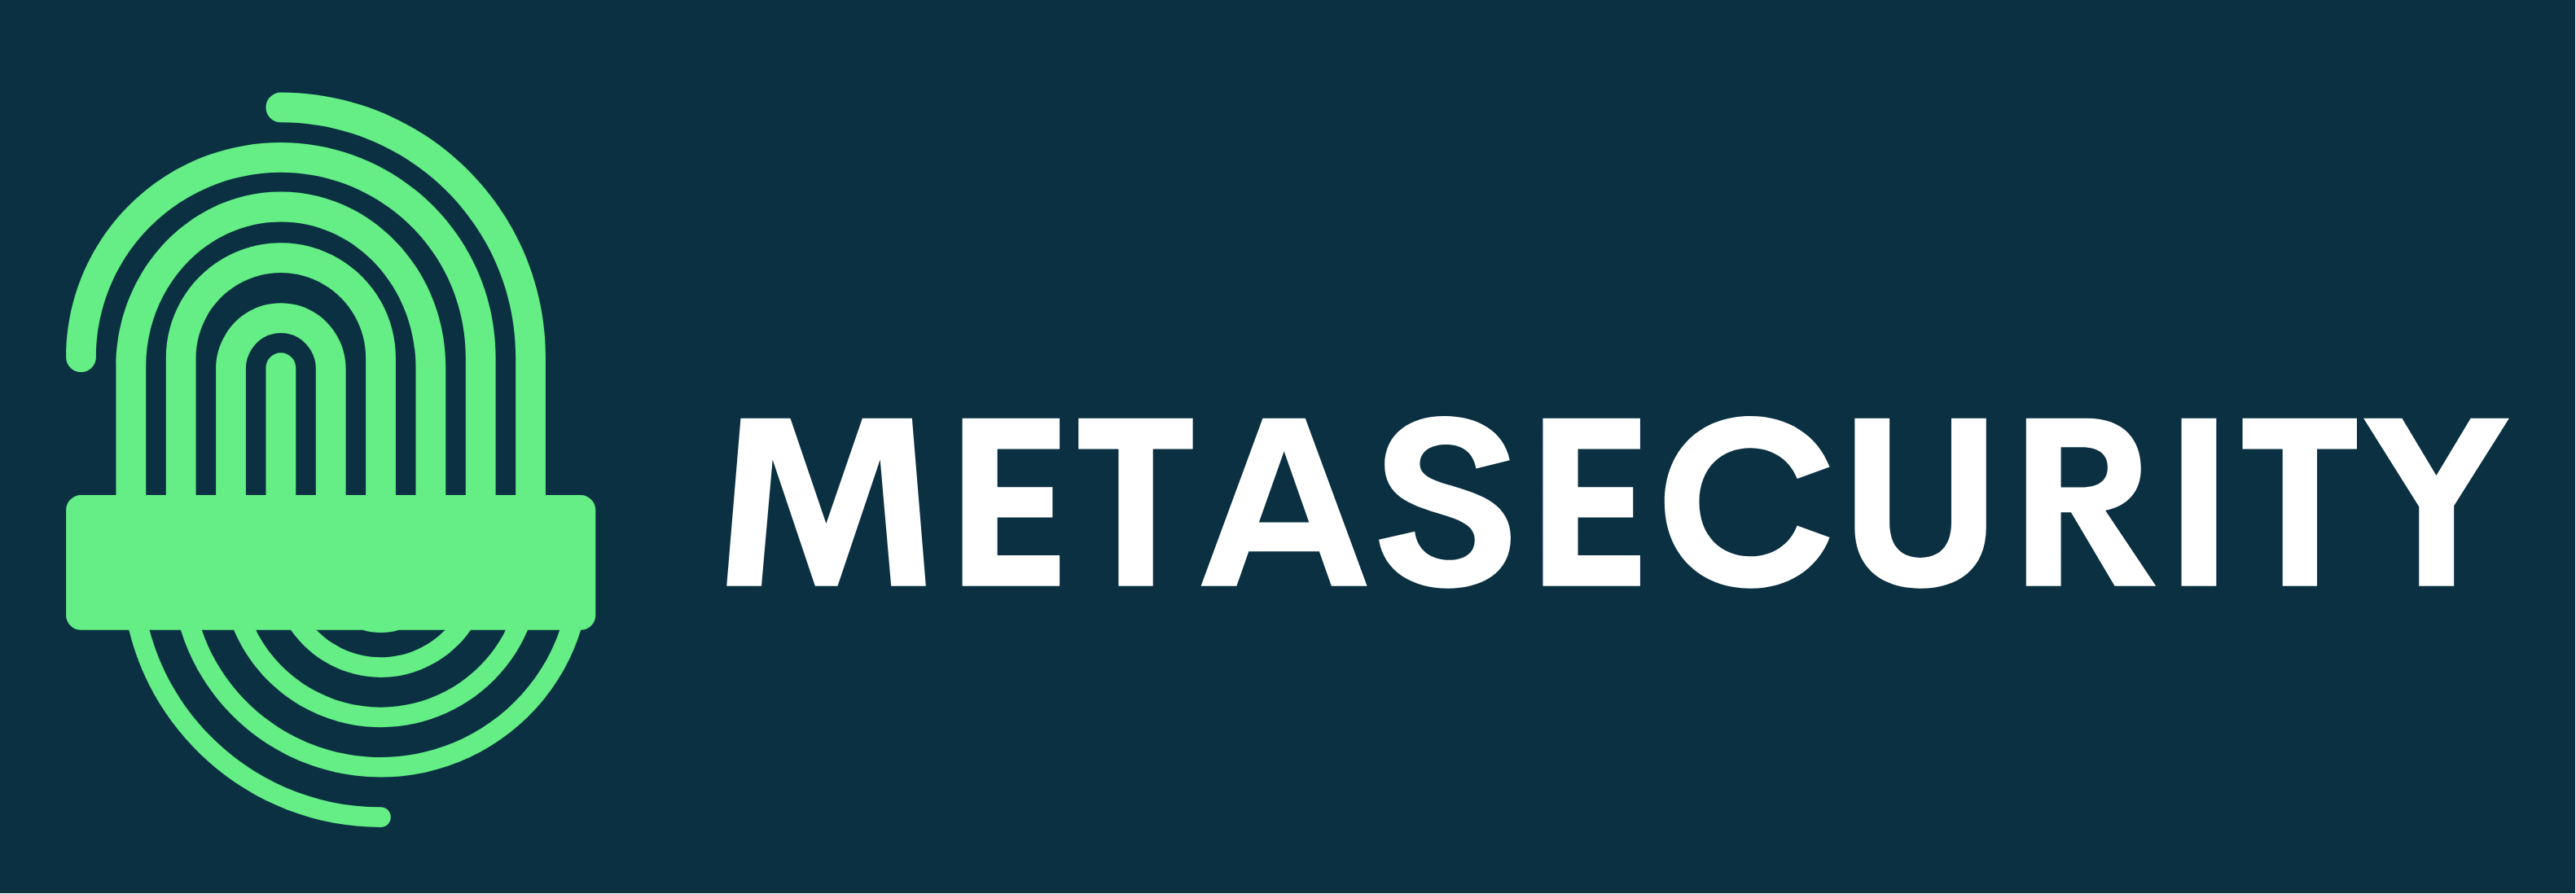 metasecurity